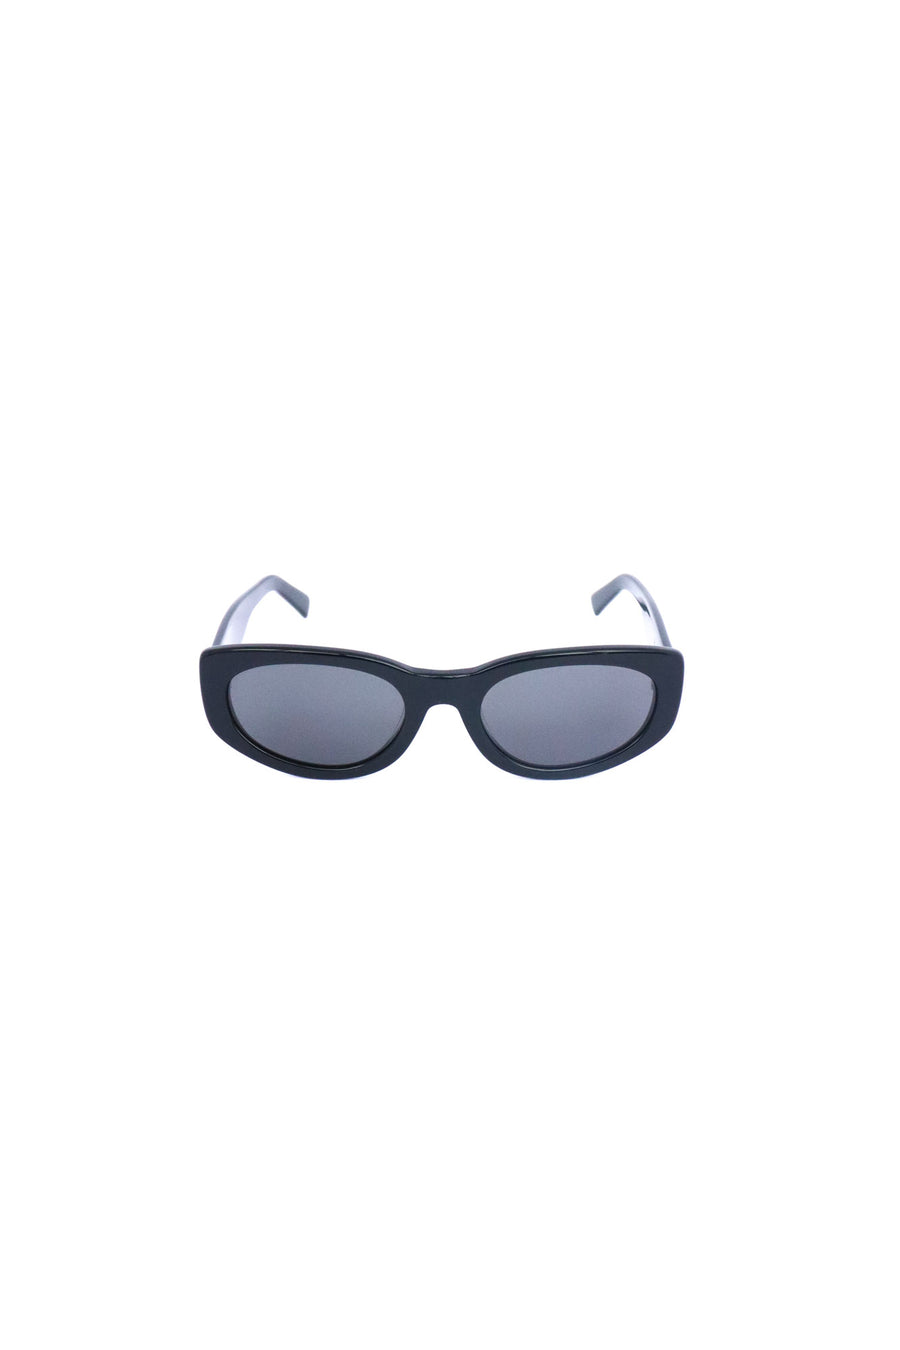 Avoir Eyewear - Koral in Midnight Black - Sunglasses